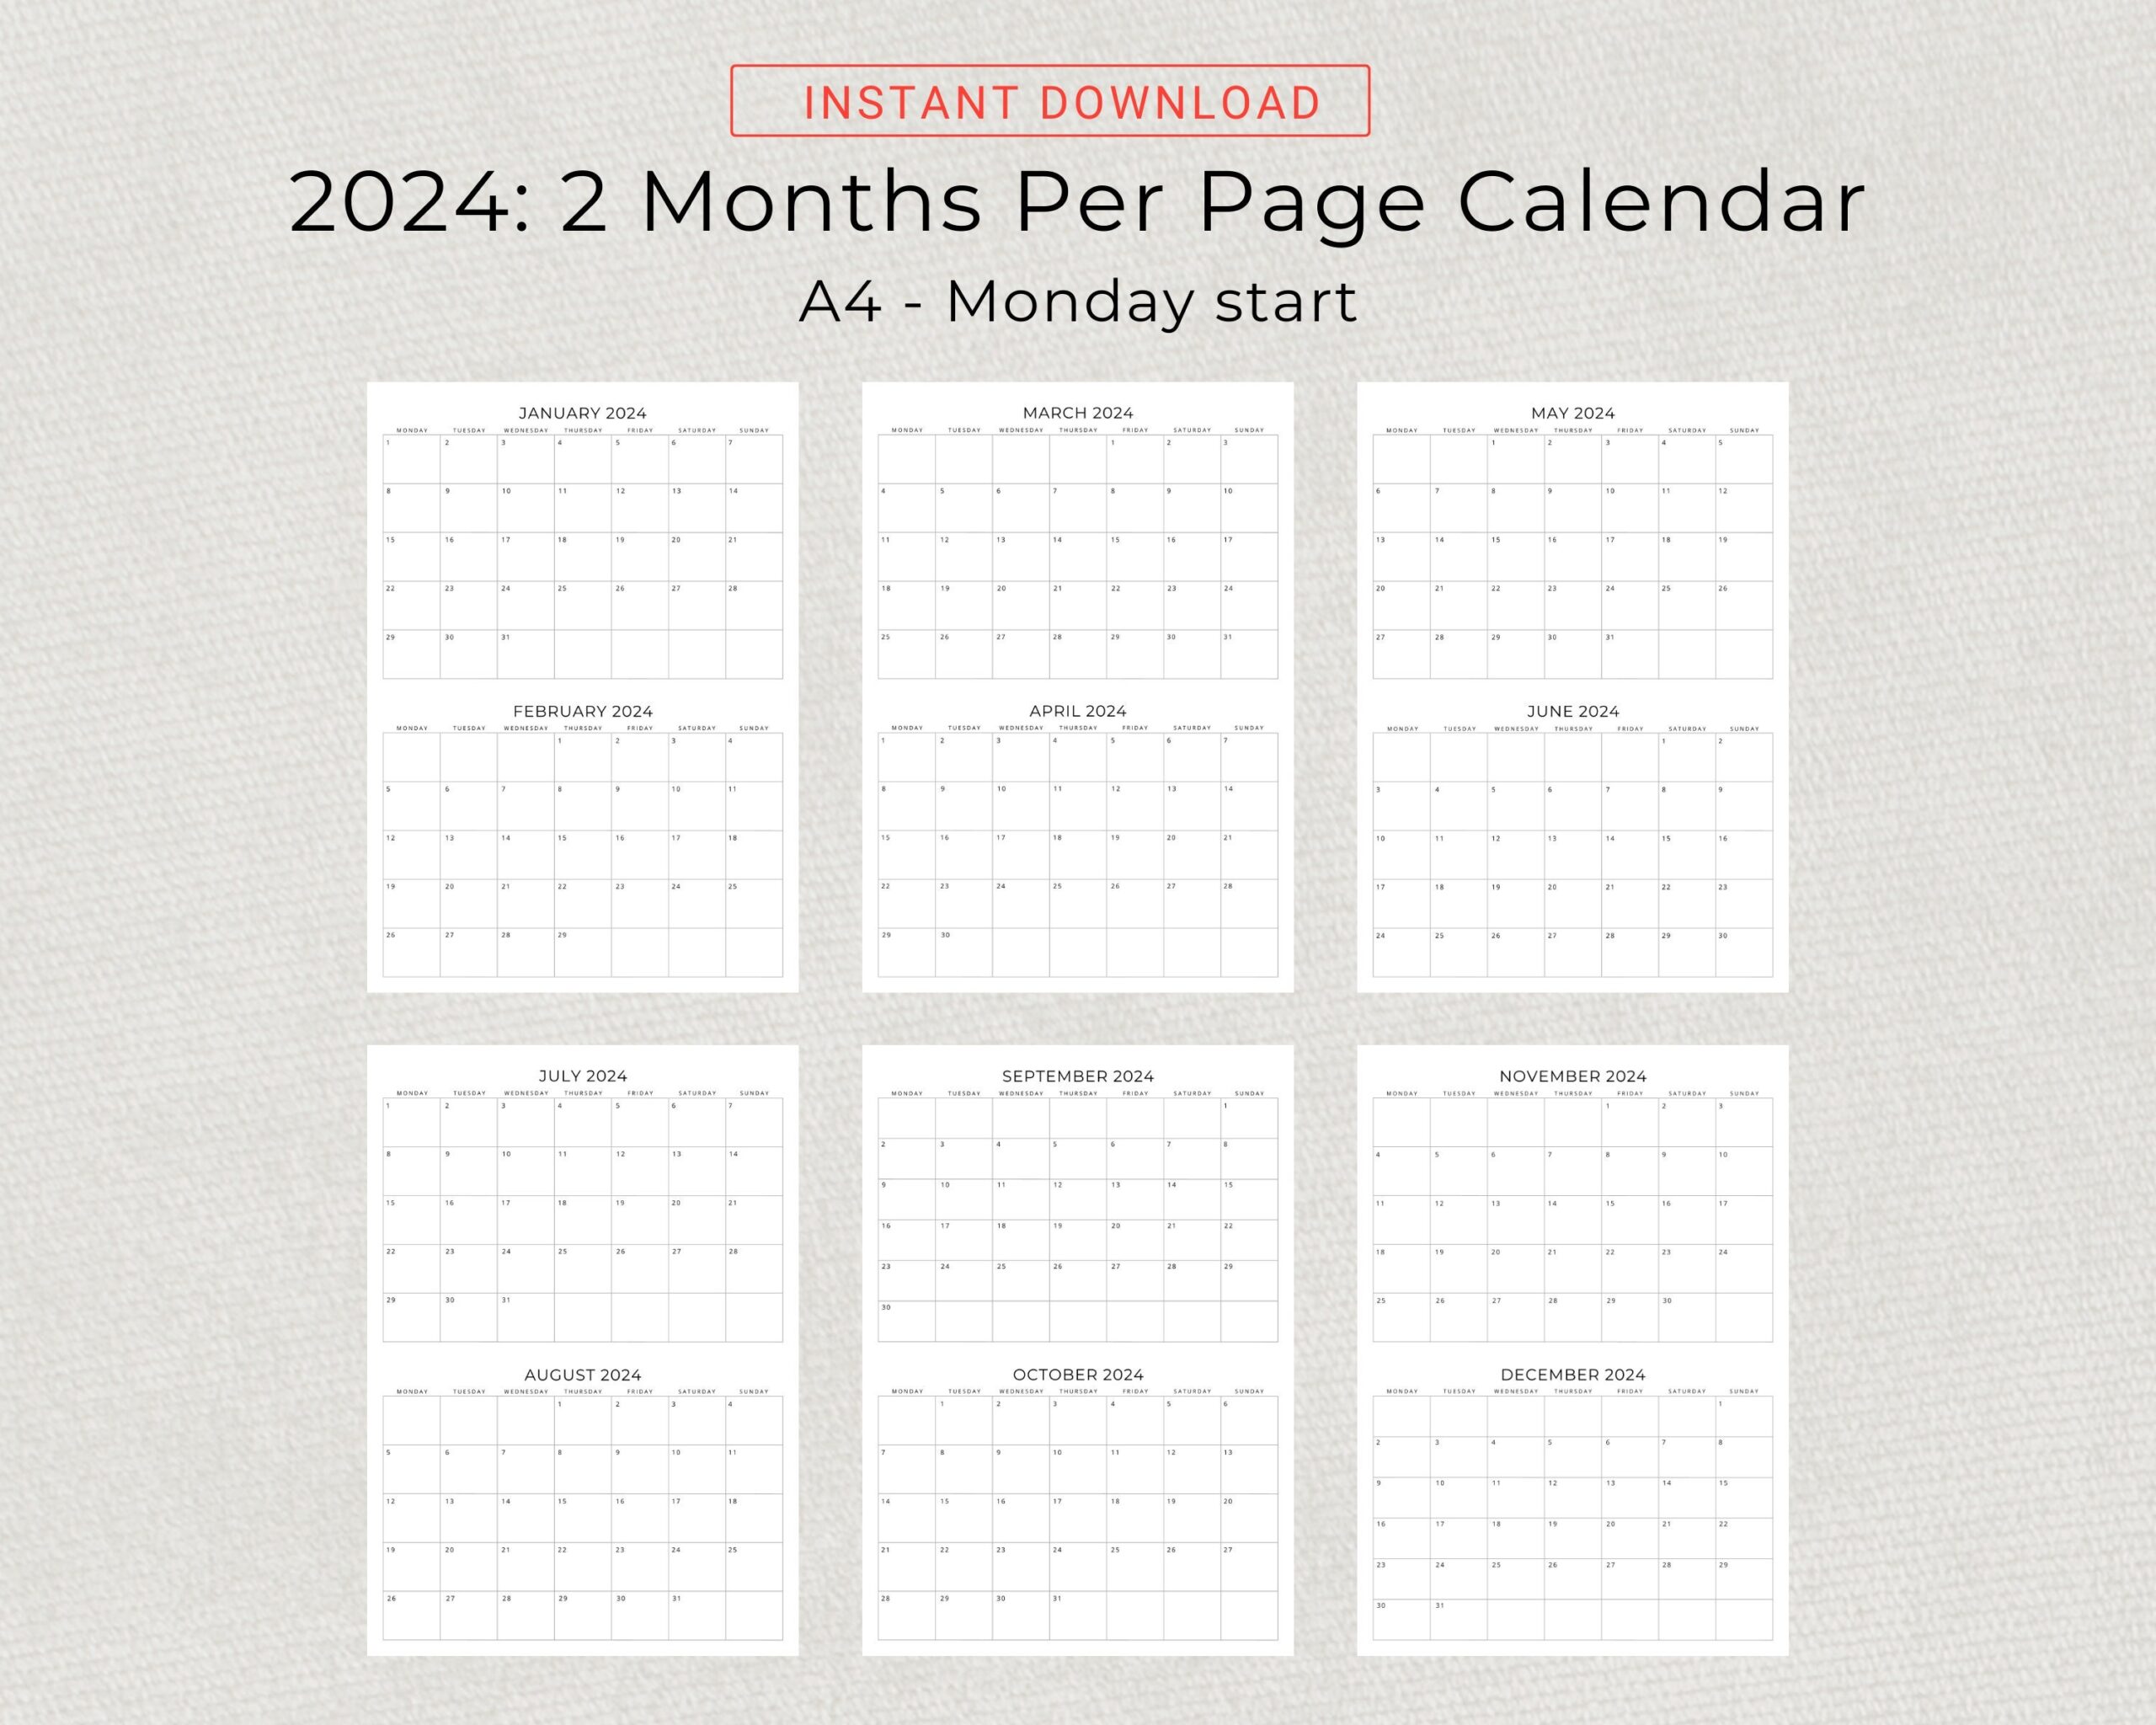 Buy 2024 2 Month Calendar 2024 Planner Calendar Wall Calendar 2 for Free Printable Calendar 2024 2 Months Per Page